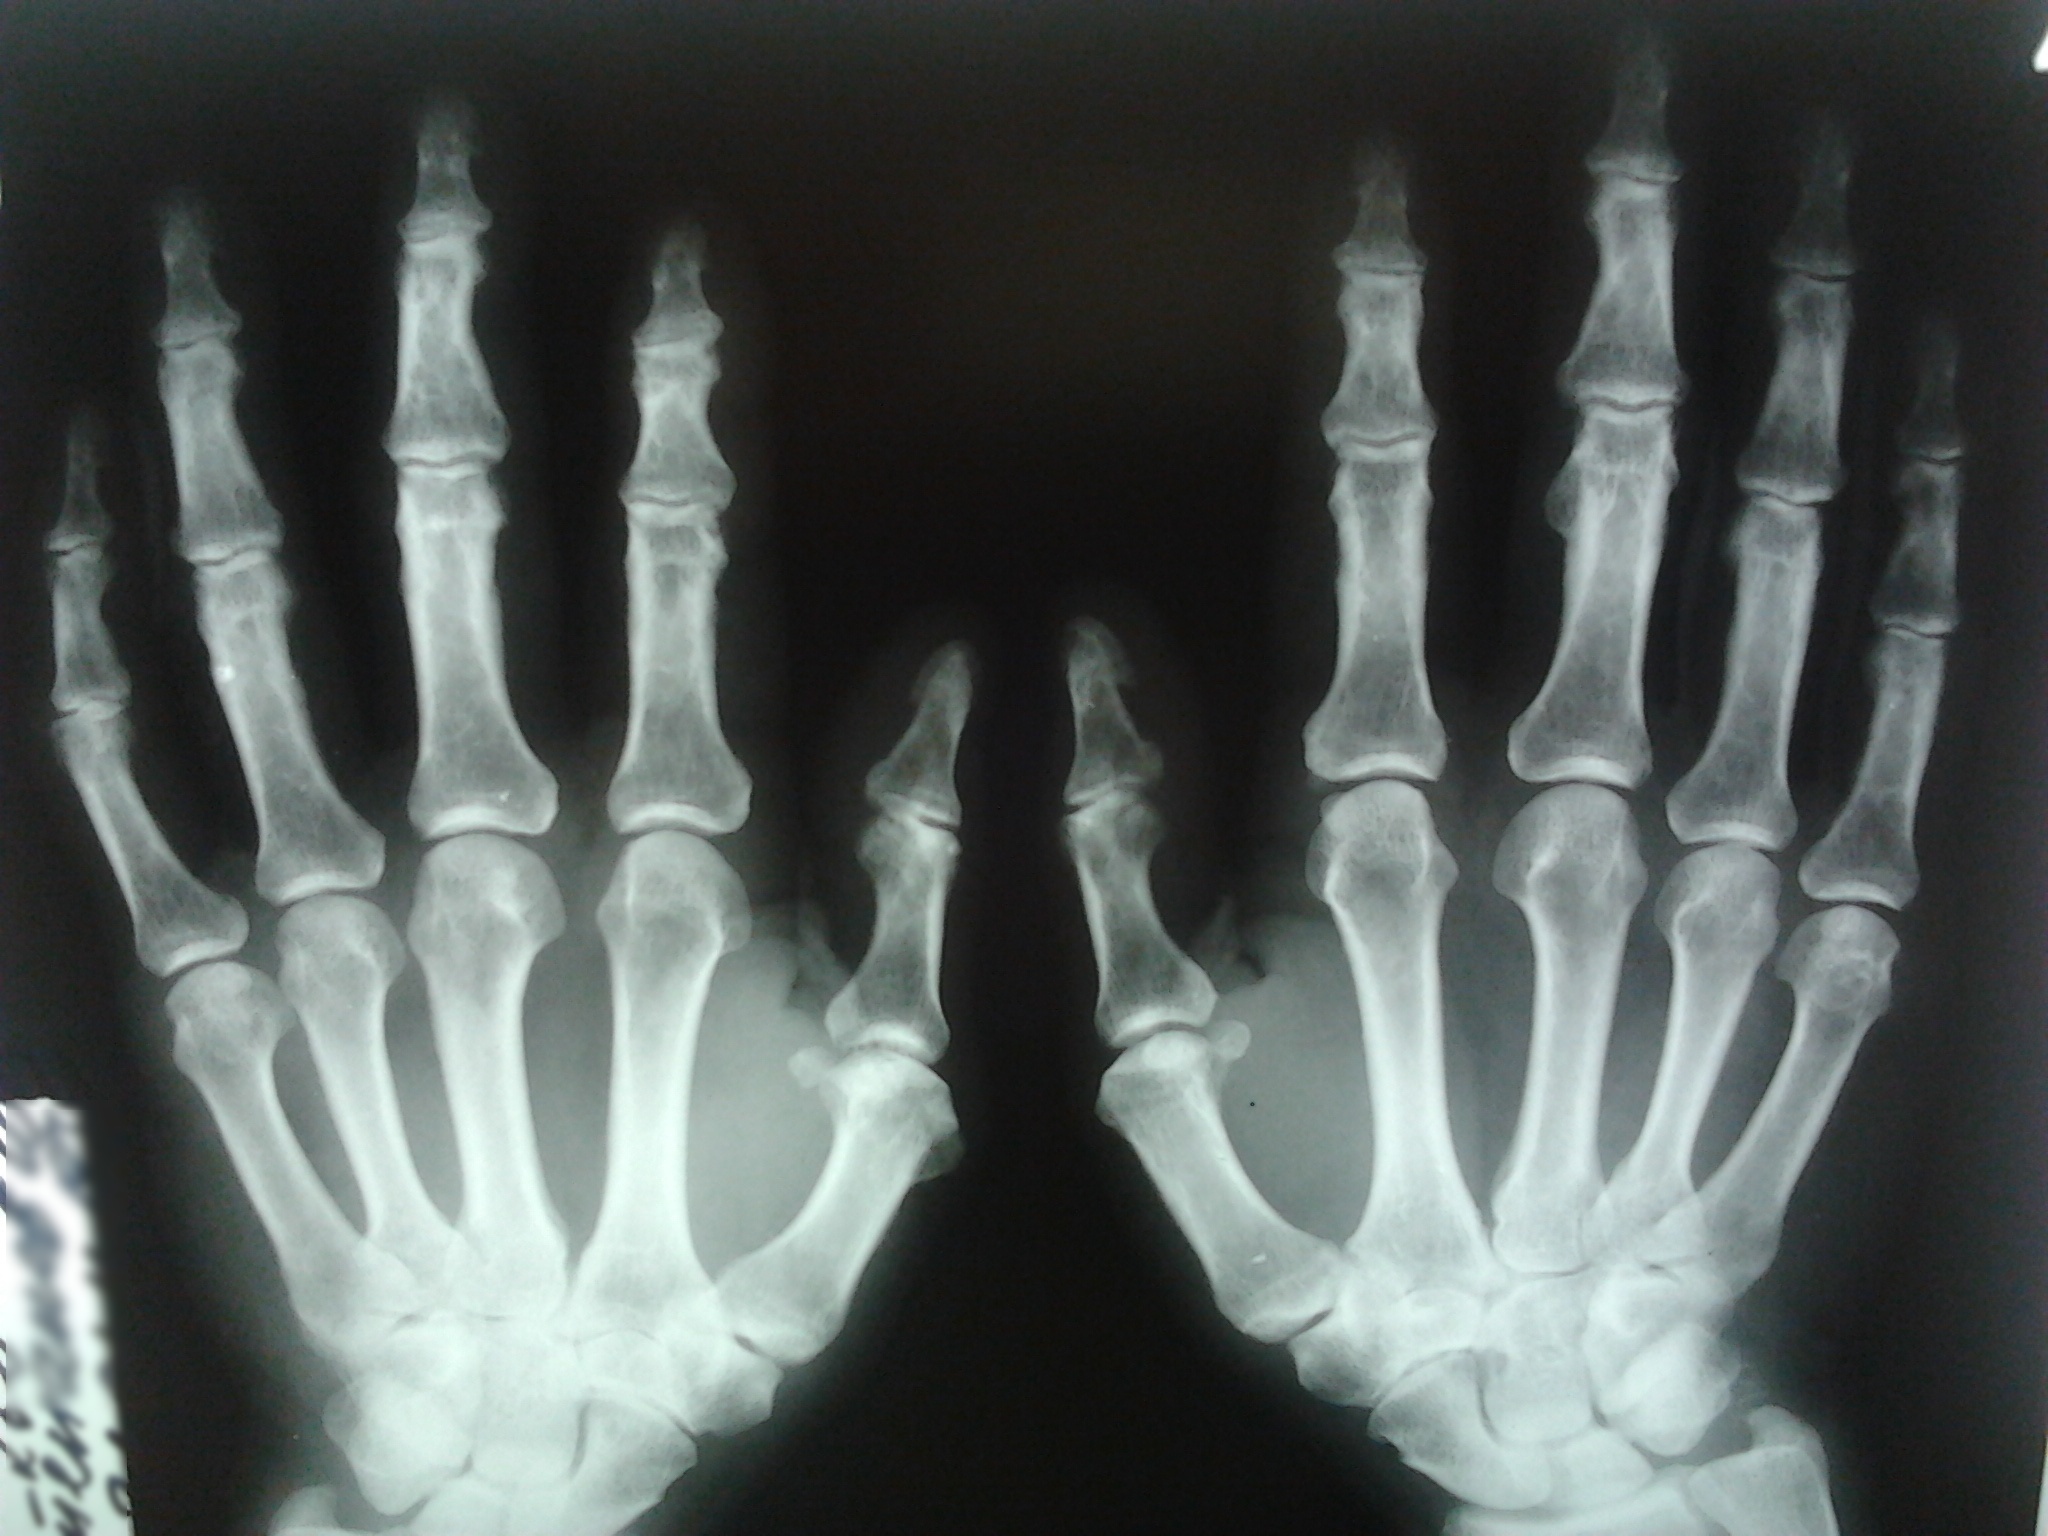 Артрит фаланговых суставов. Остеоартроз 1 пястно фалангового сустава рентген. Артроз межфаланговых суставов кистей рентген. Сустав 1 пальца кисти рентген. Полиостеоартроз суставов кистей рентген.